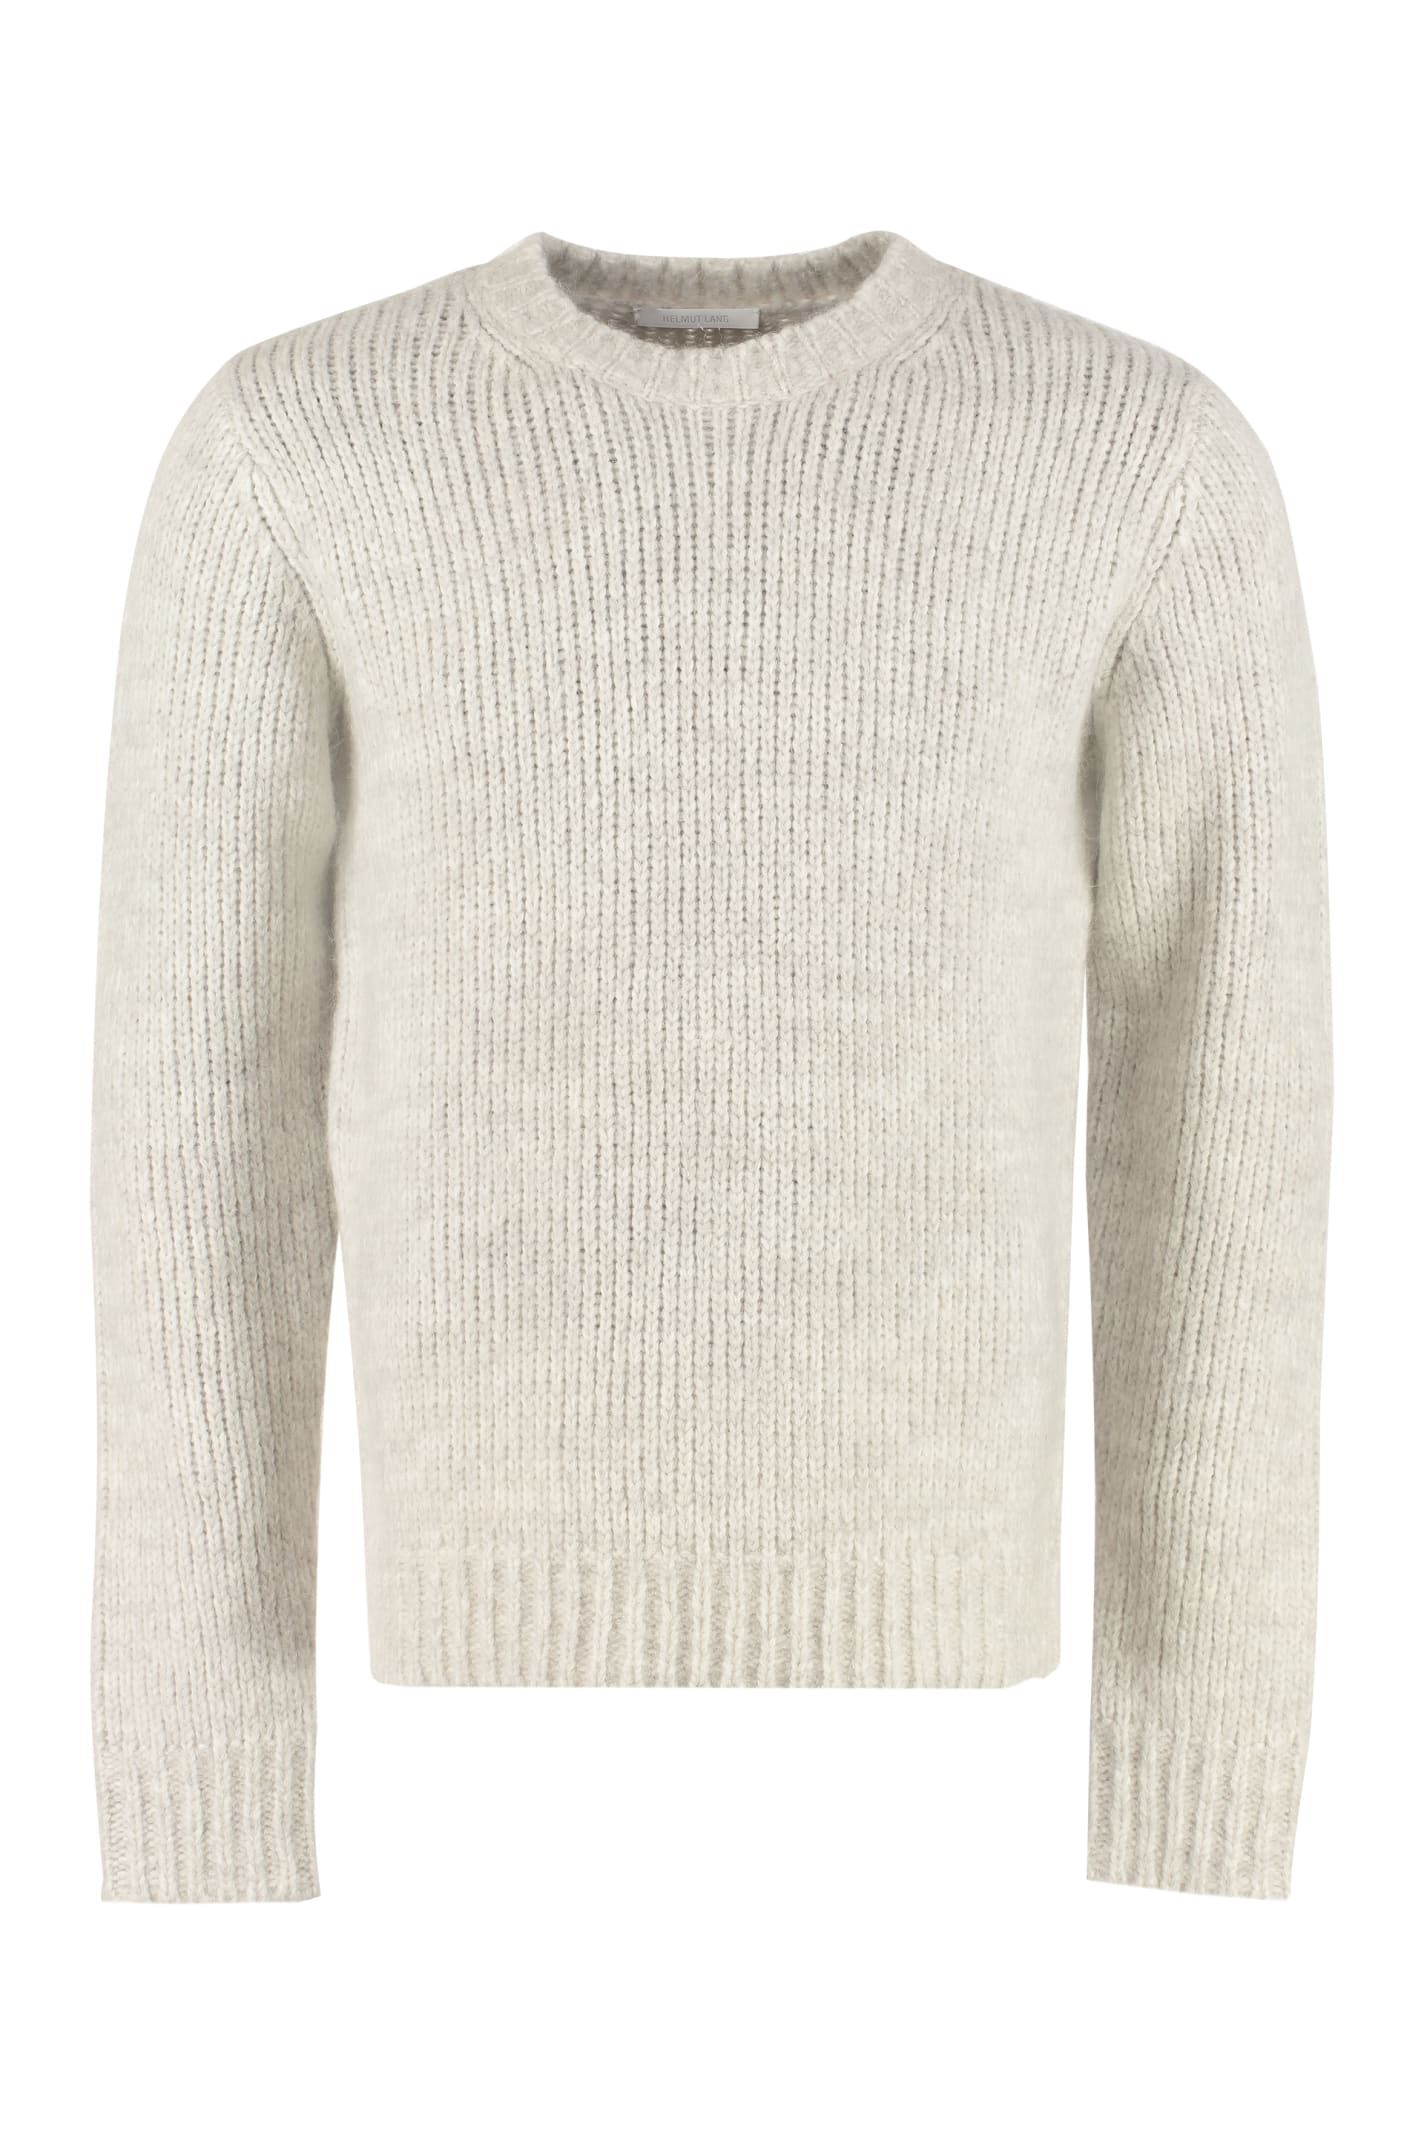 Helmut Lang Sweaters | italist, ALWAYS LIKE A SALE